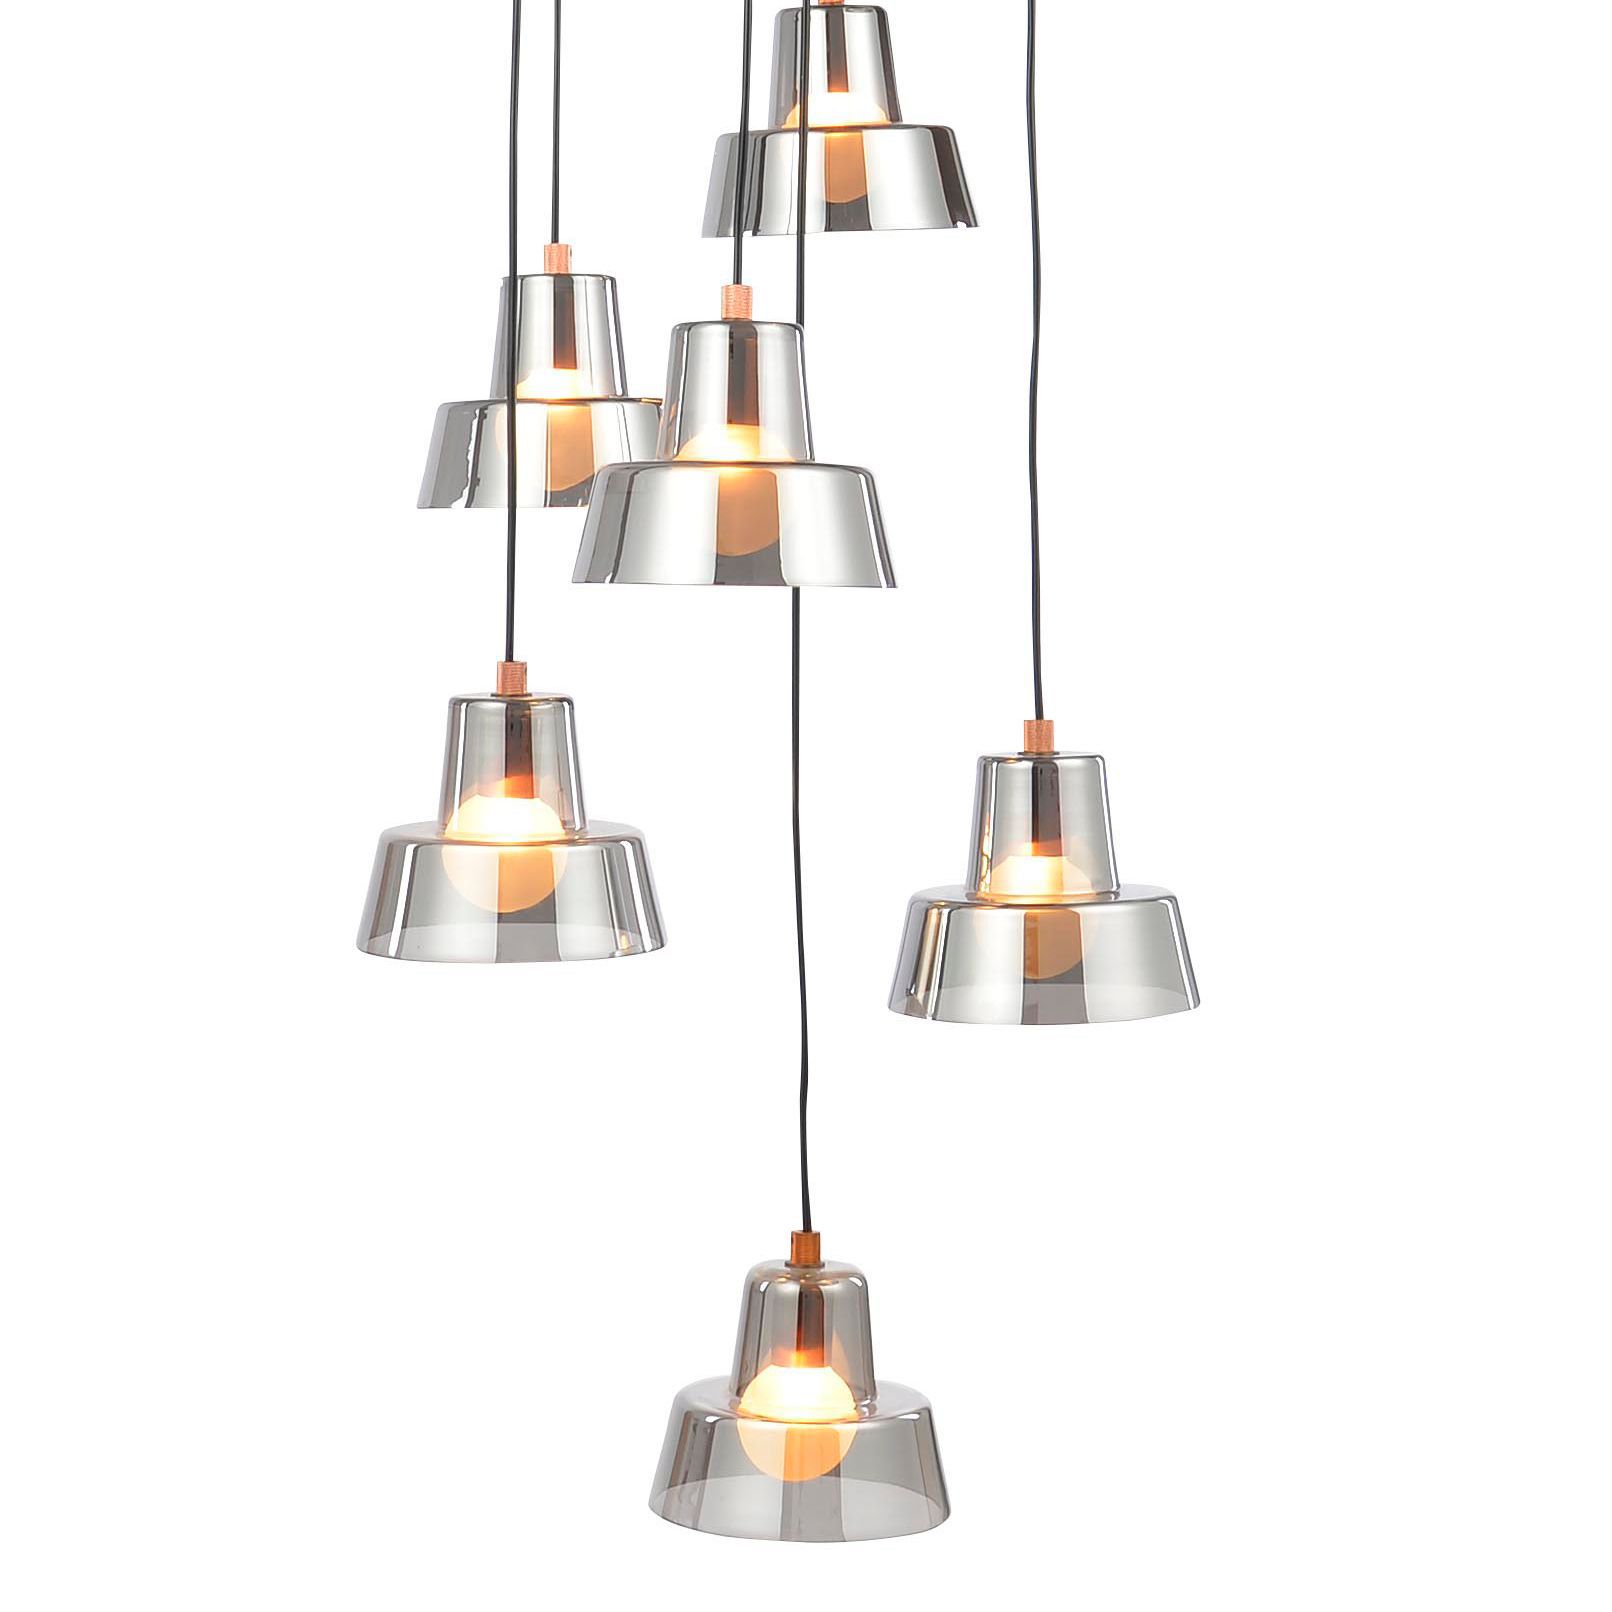 Inlight Sadi Brushed Glass & metal Smoked chrome effect 7 Lamp LED Ceiling light